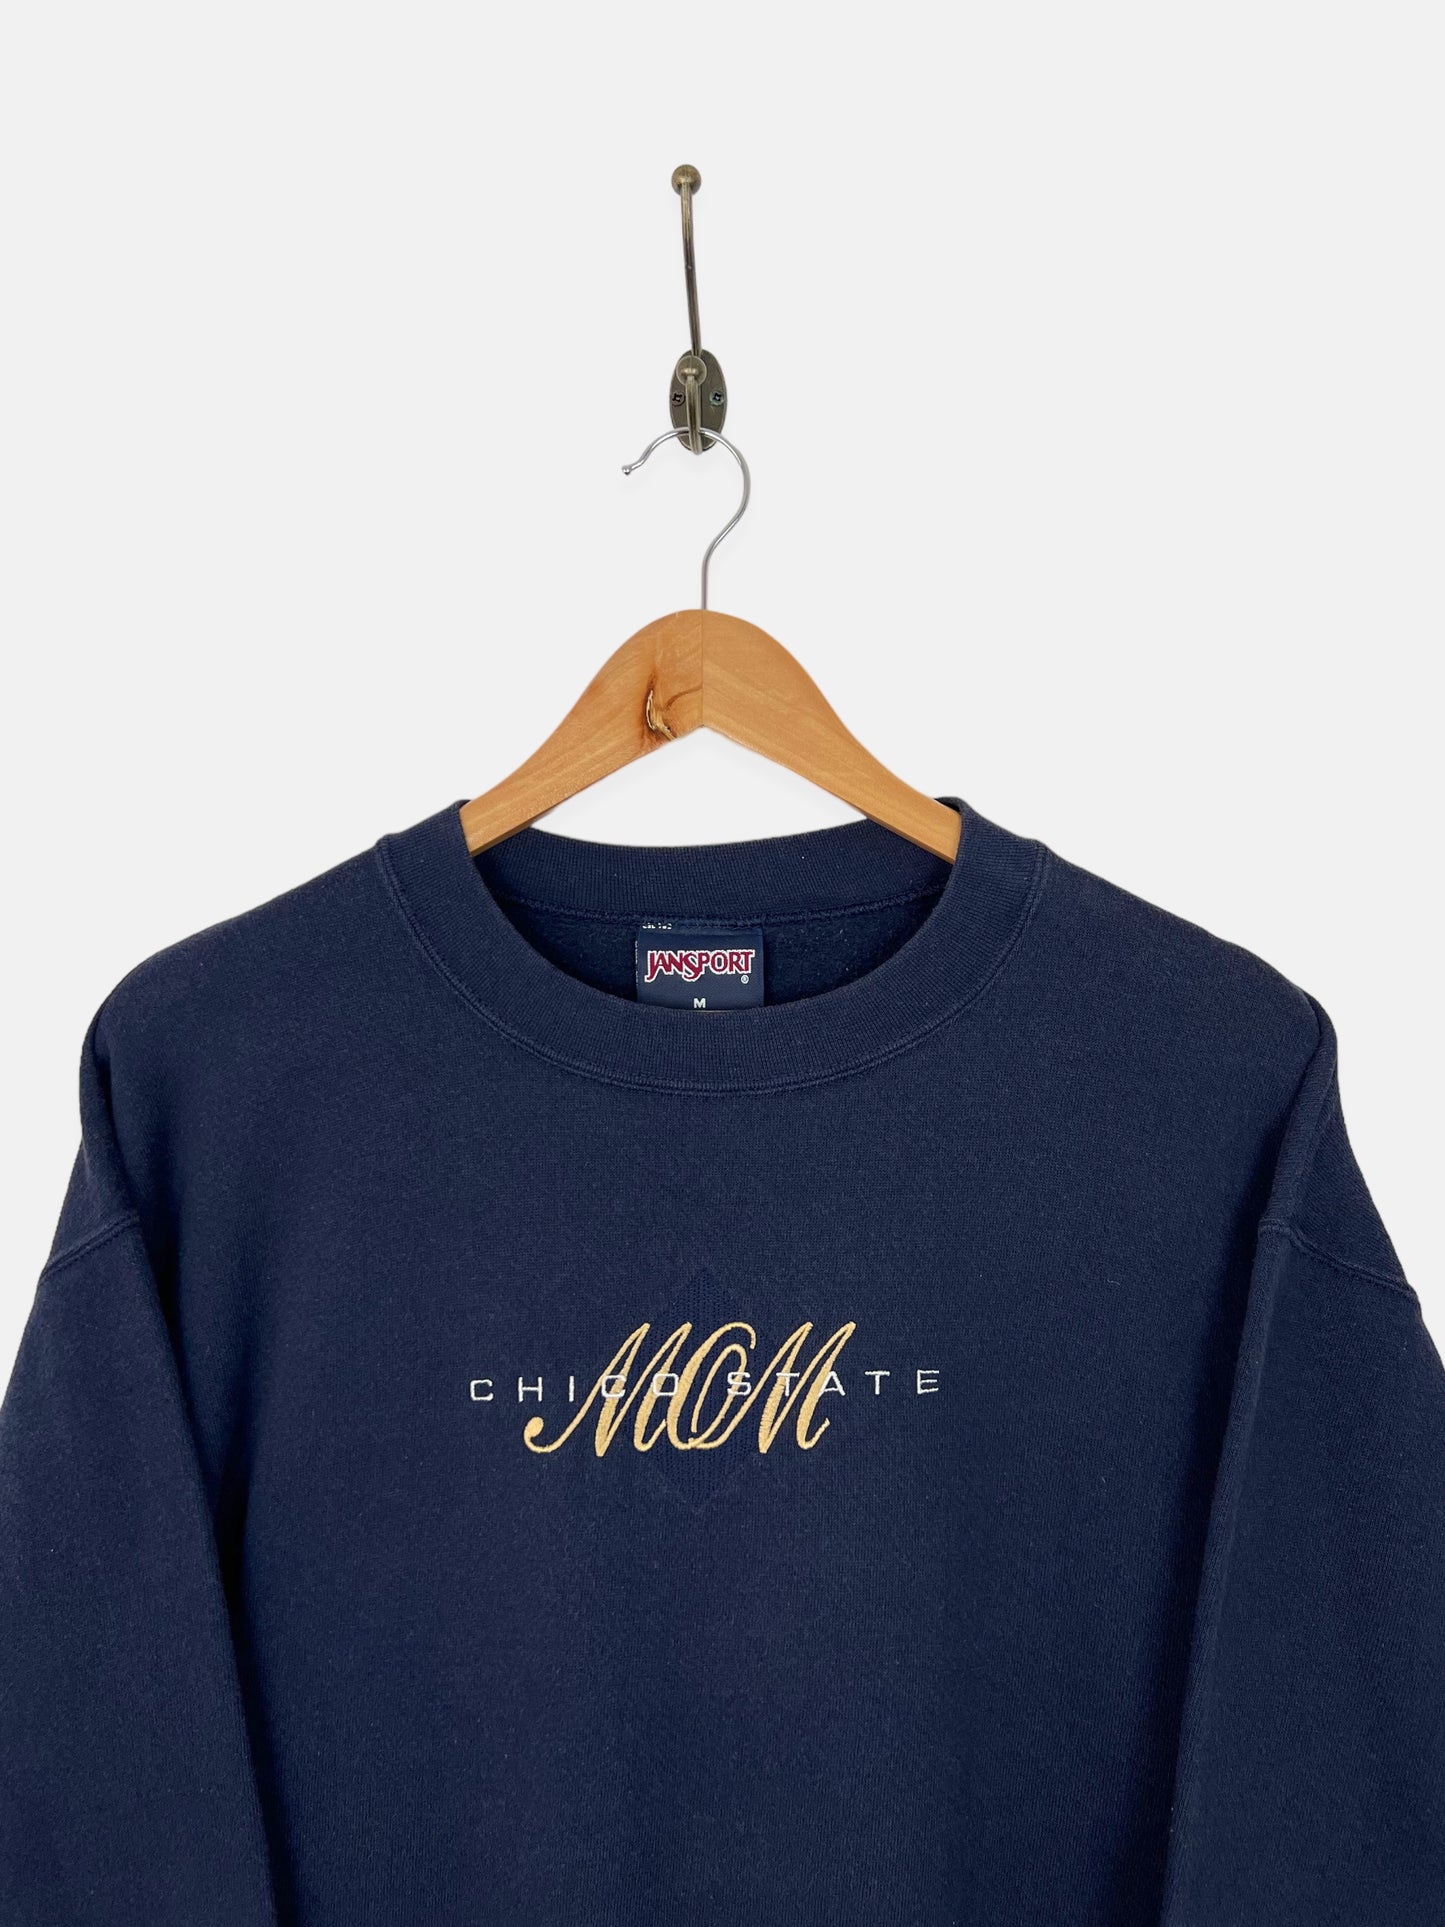 90's Jansport Chico State Mum Embroidered Vintage Sweatshirt Size 8-10